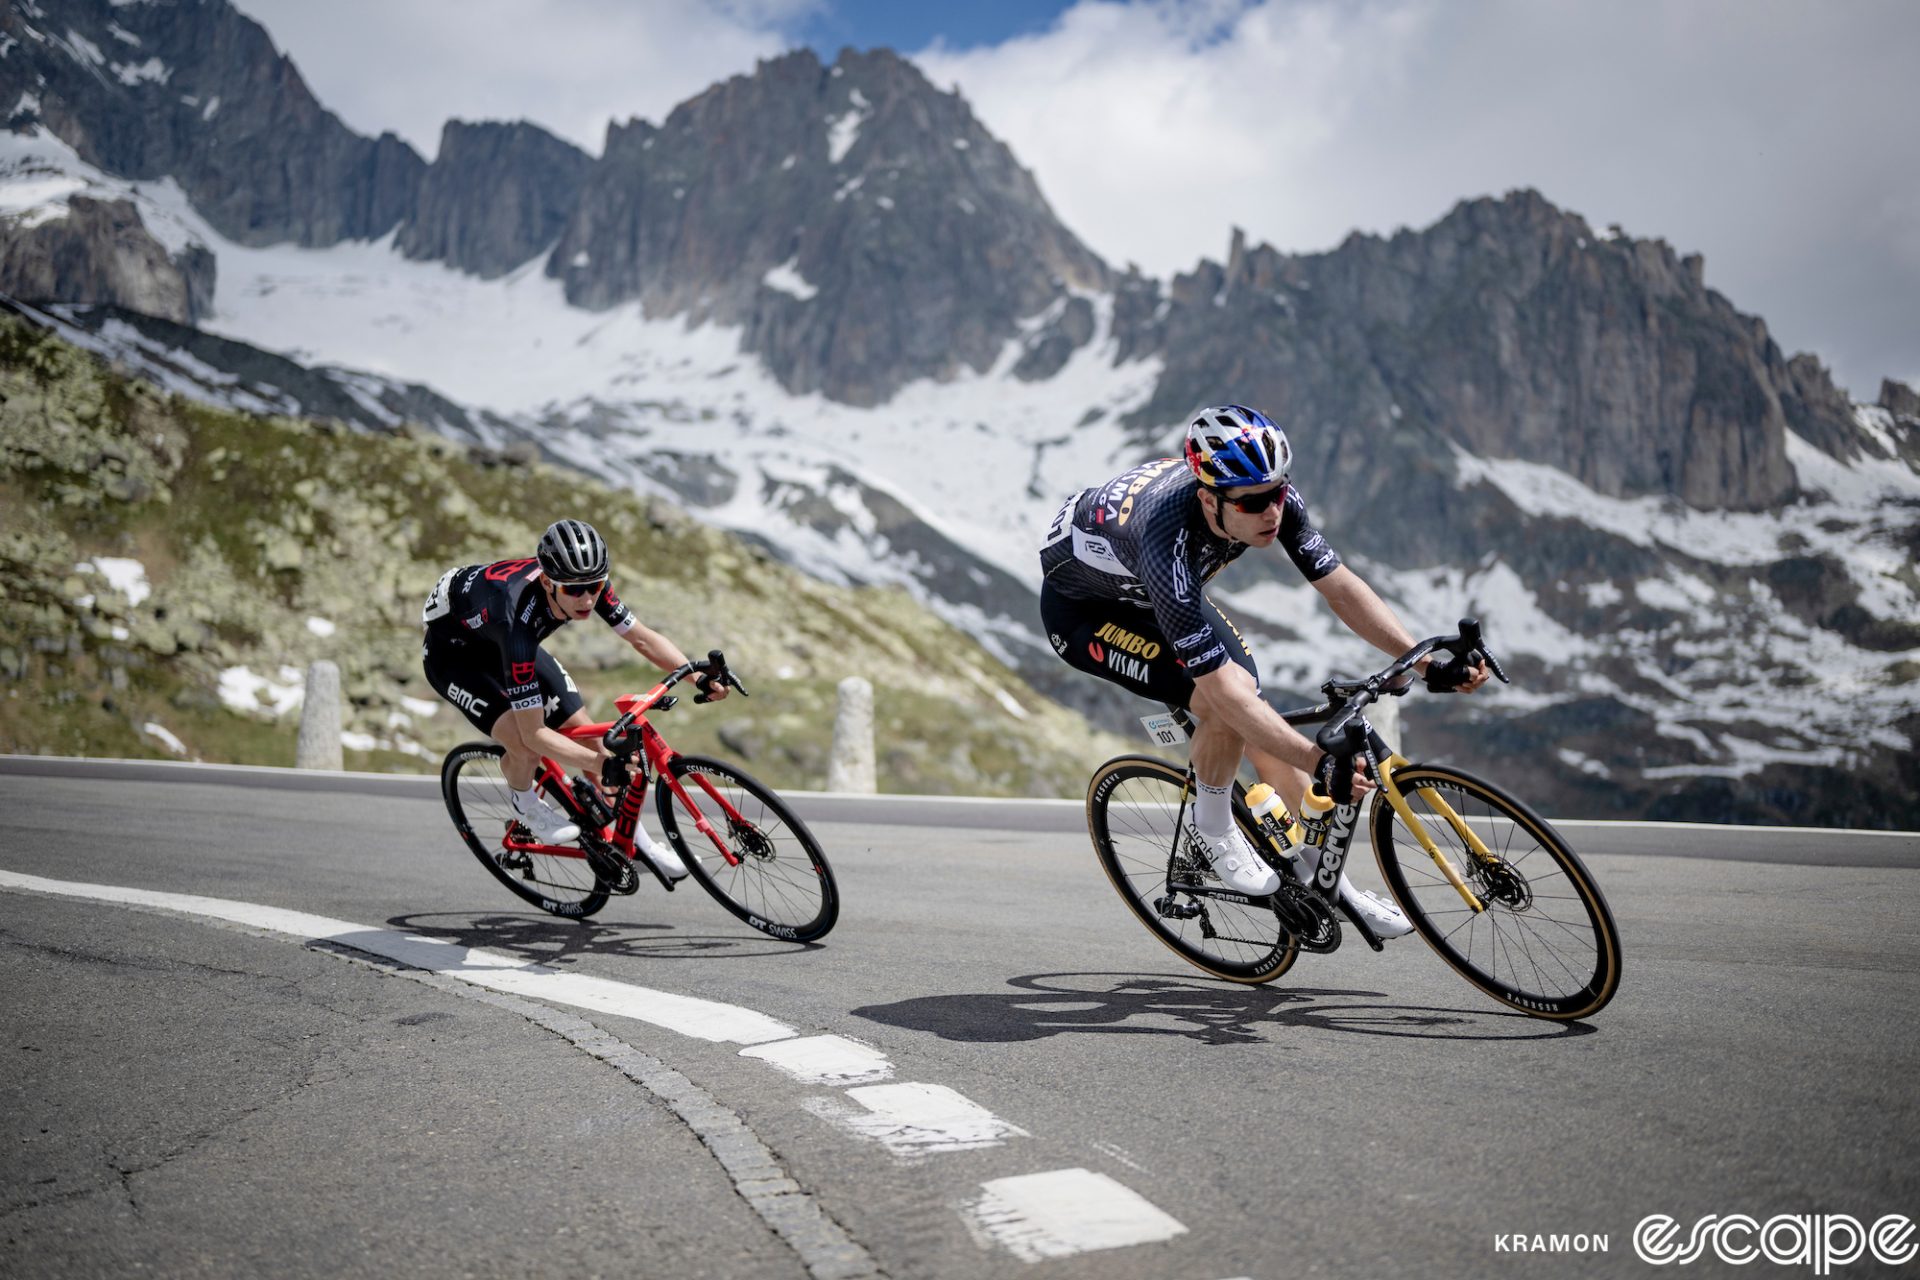 Wout van Aert descends at the 2023 Tour of Switzerland.